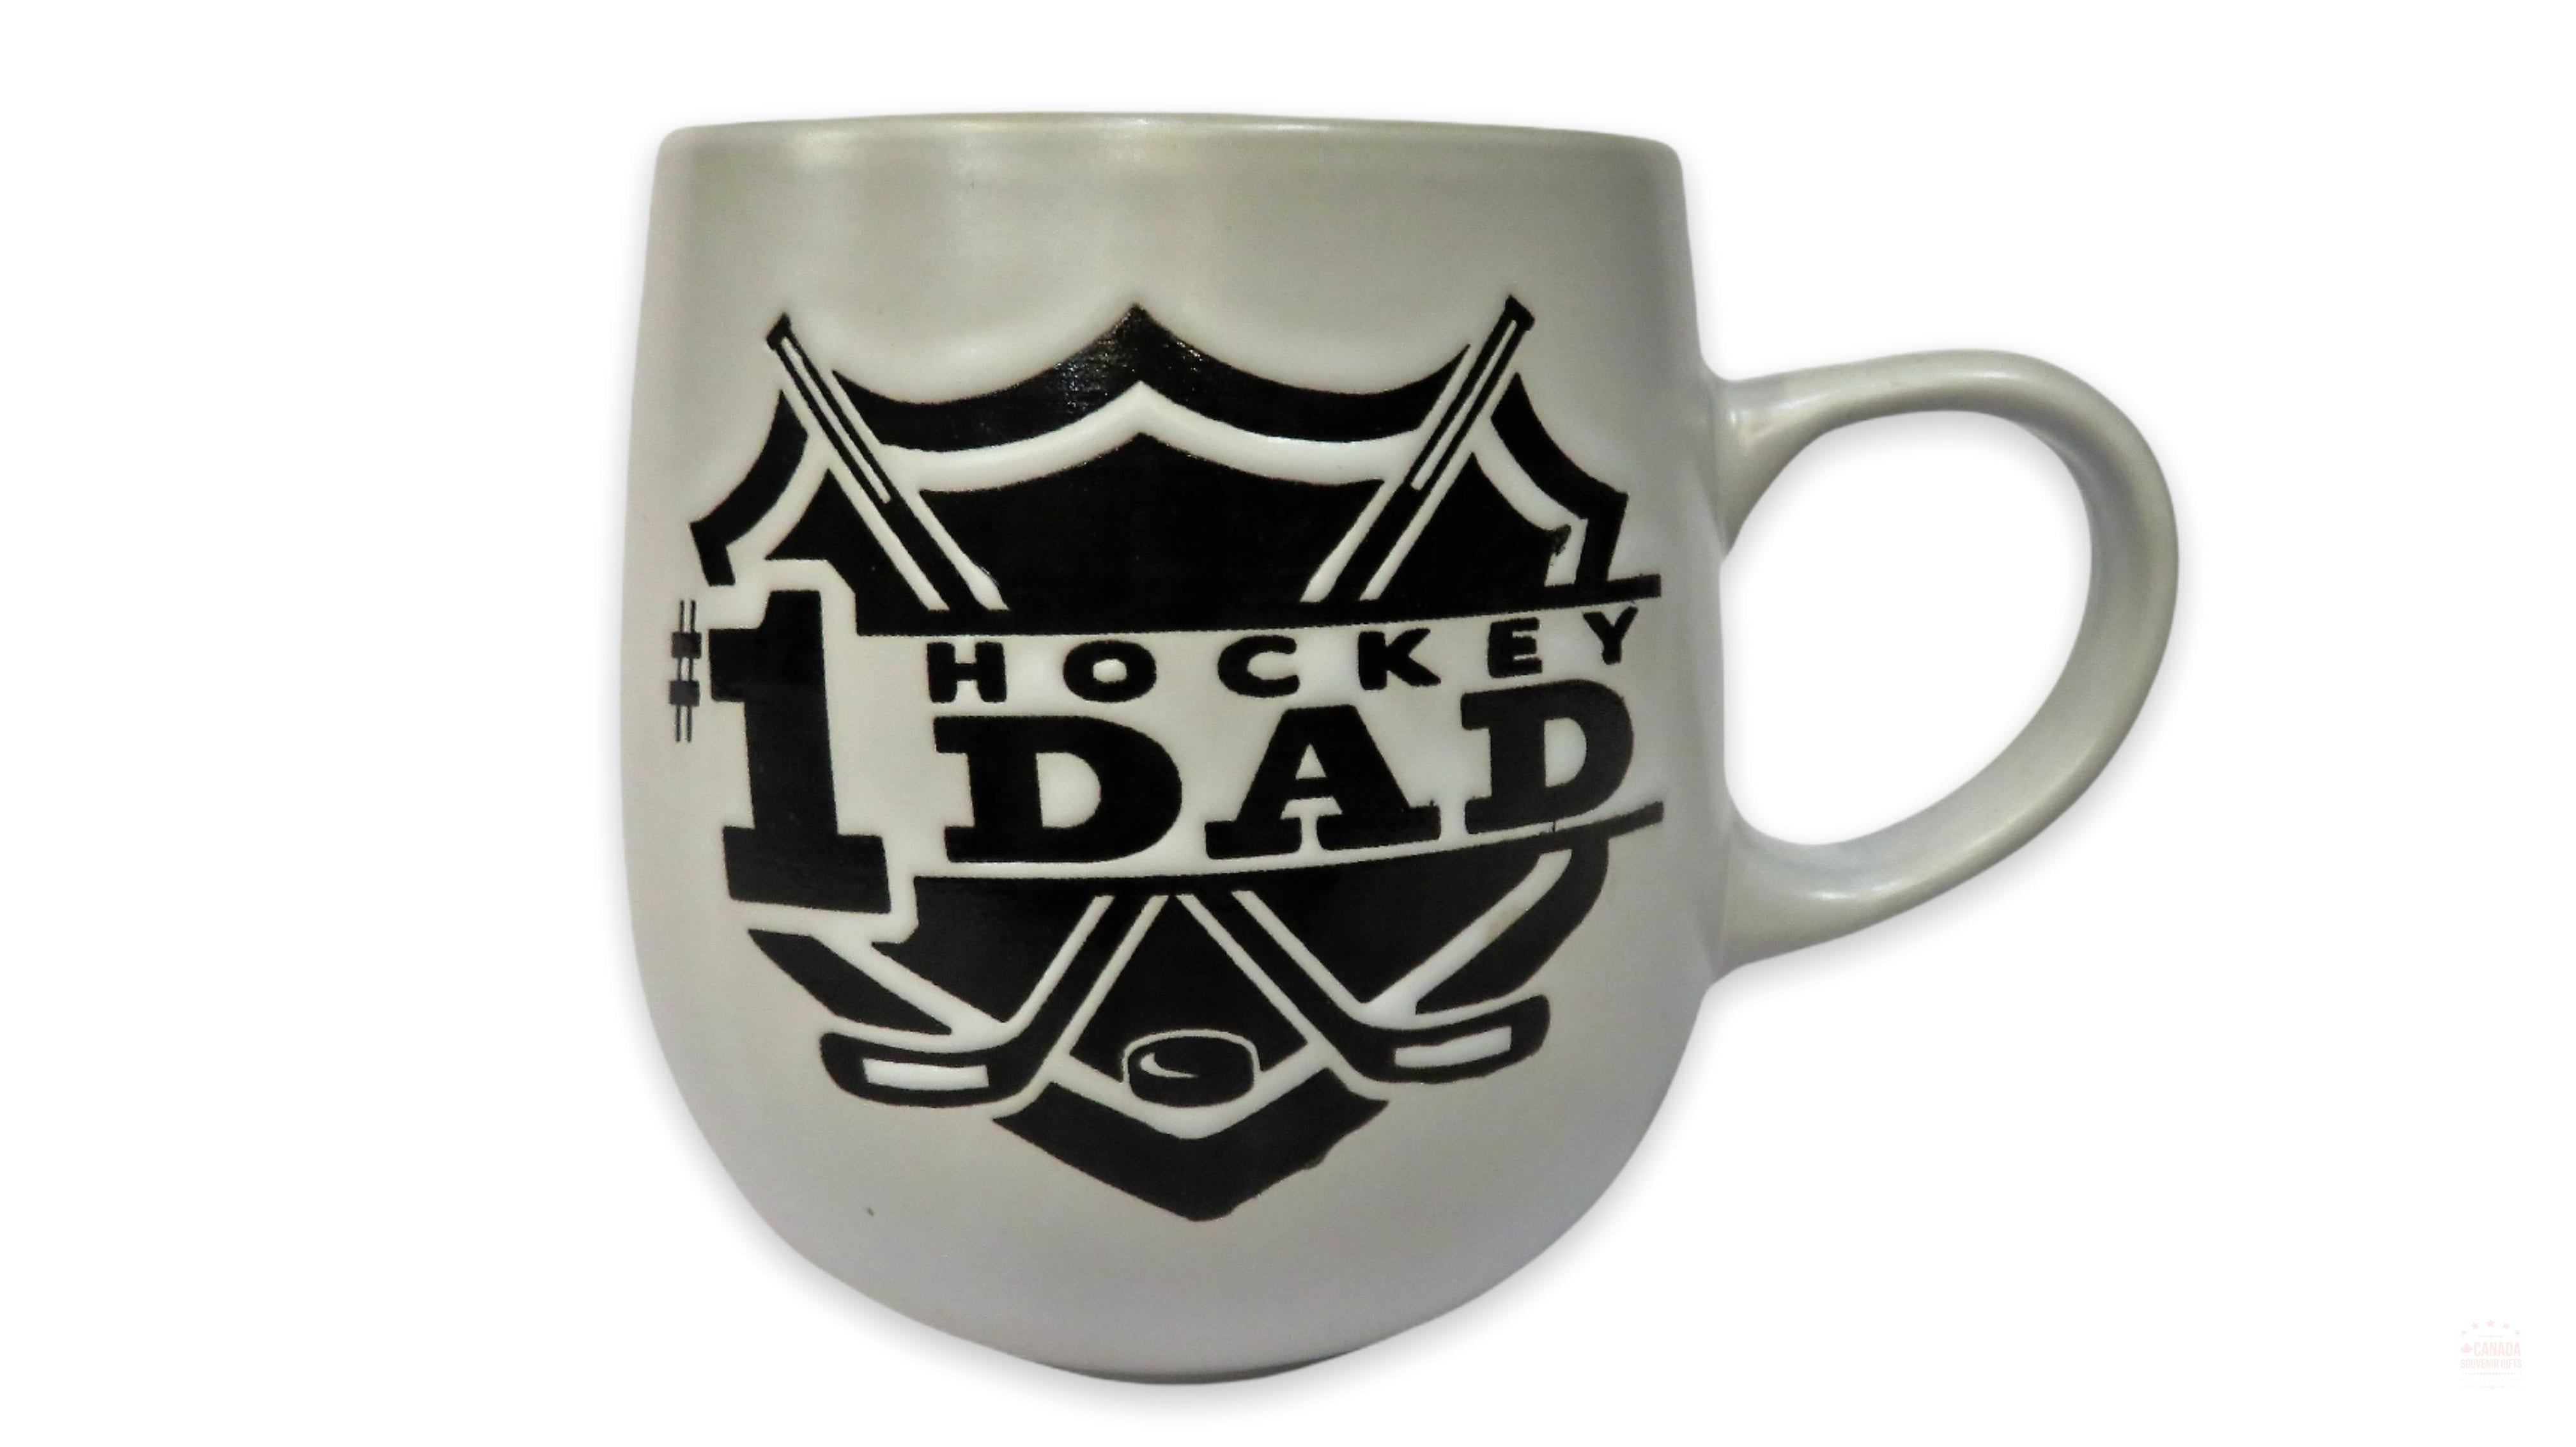 No. 1 Hockey Mom and No. 1 Hockey Dad Coffee Mugs 11oz - Our hockey mug is the perfect gift for those who eat, sleep and play hockey